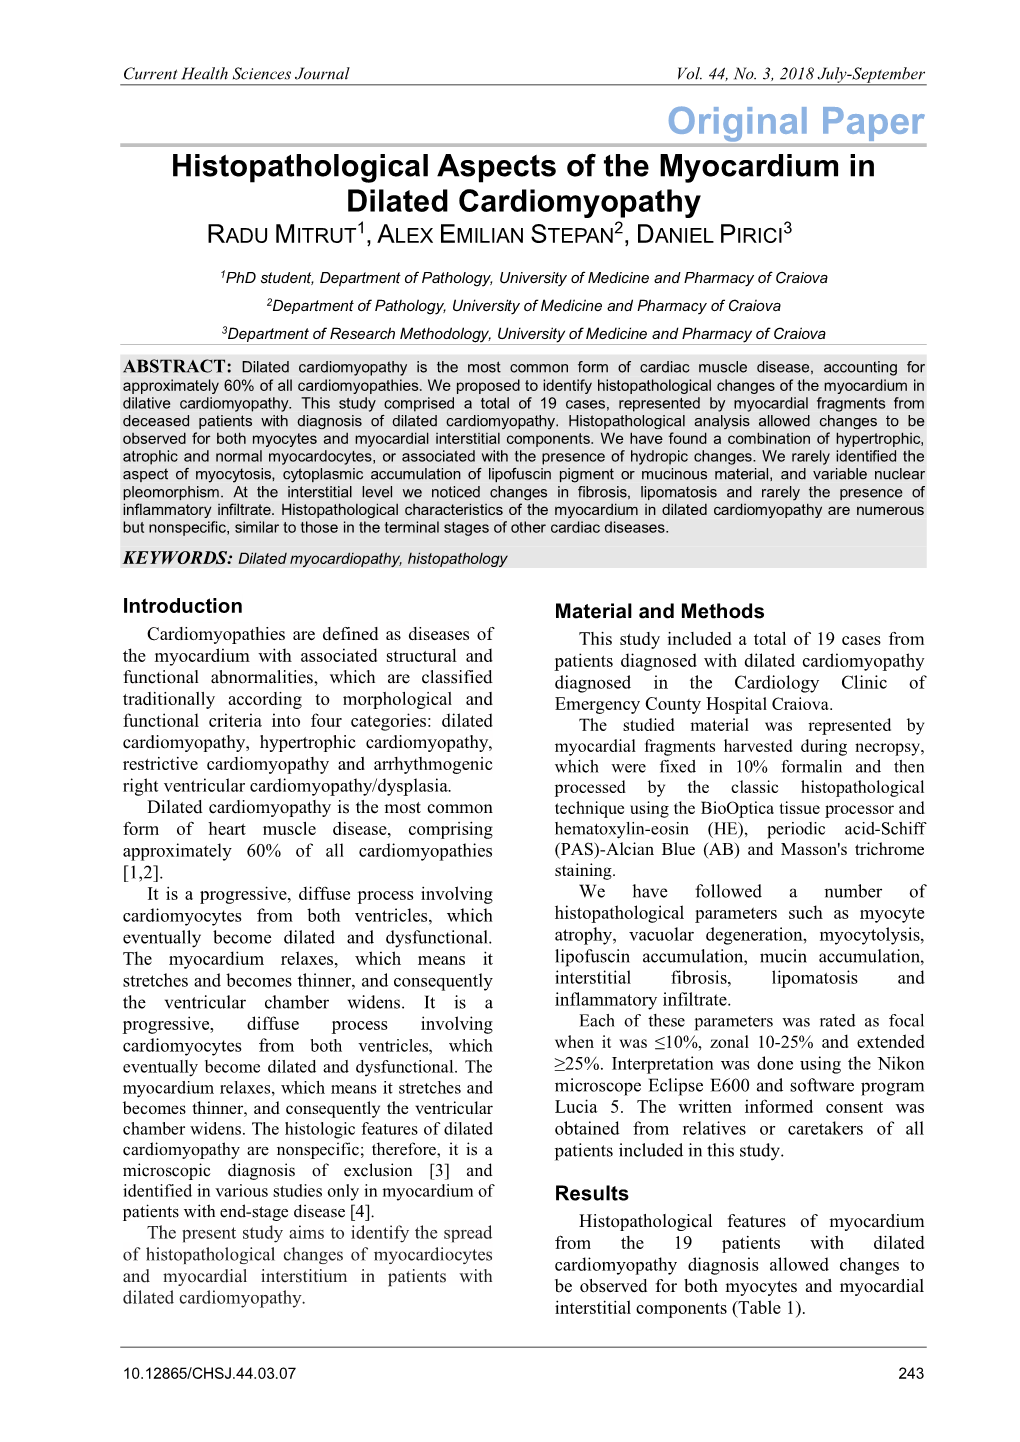 Histopathological Aspects of the Myocardium in Dilated Cardiomyopathy RADU MITRUT1, ALEX EMILIAN STEPAN2, DANIEL PIRICI3